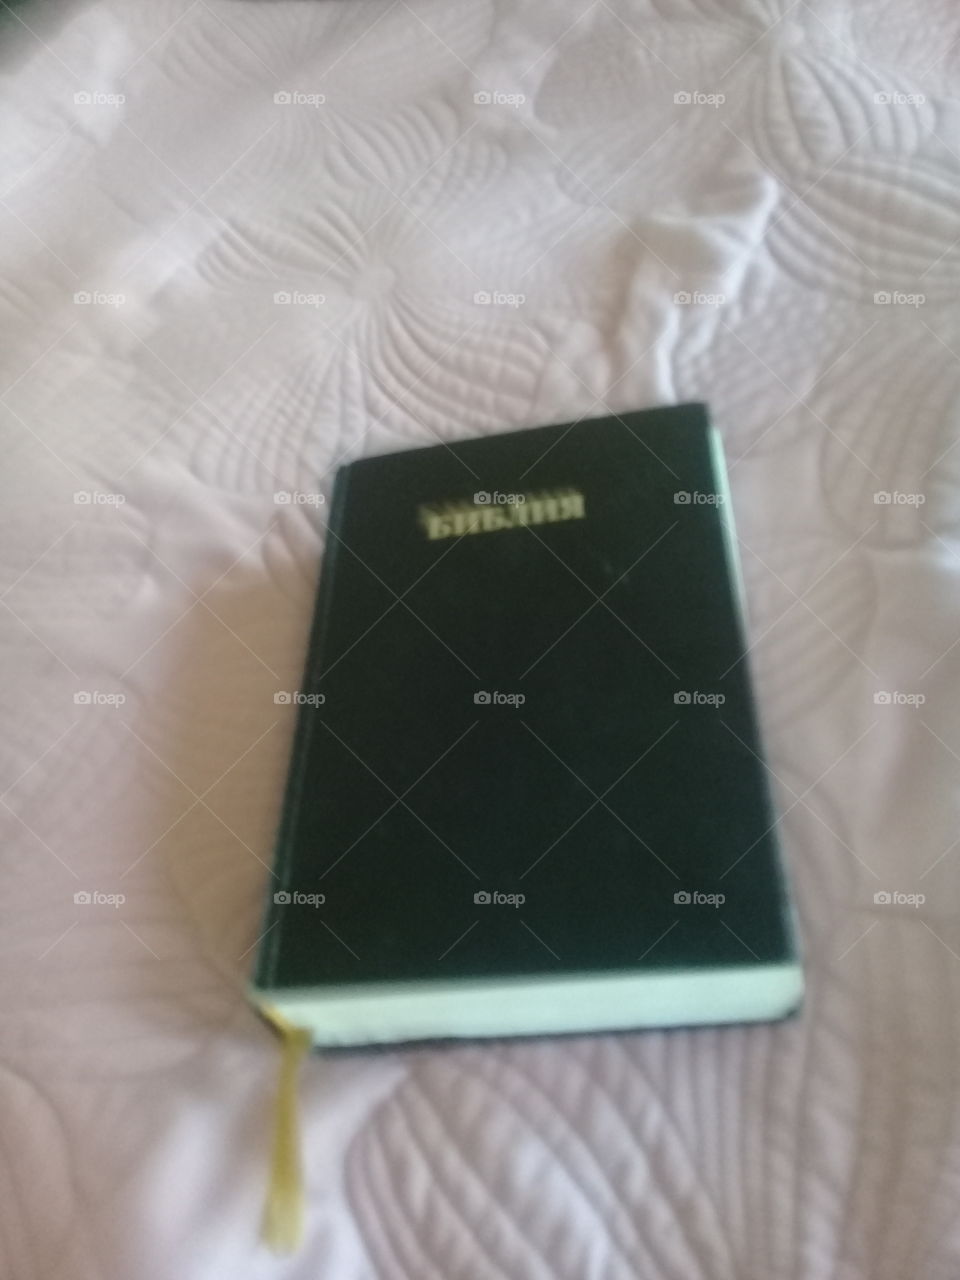 My Bible.